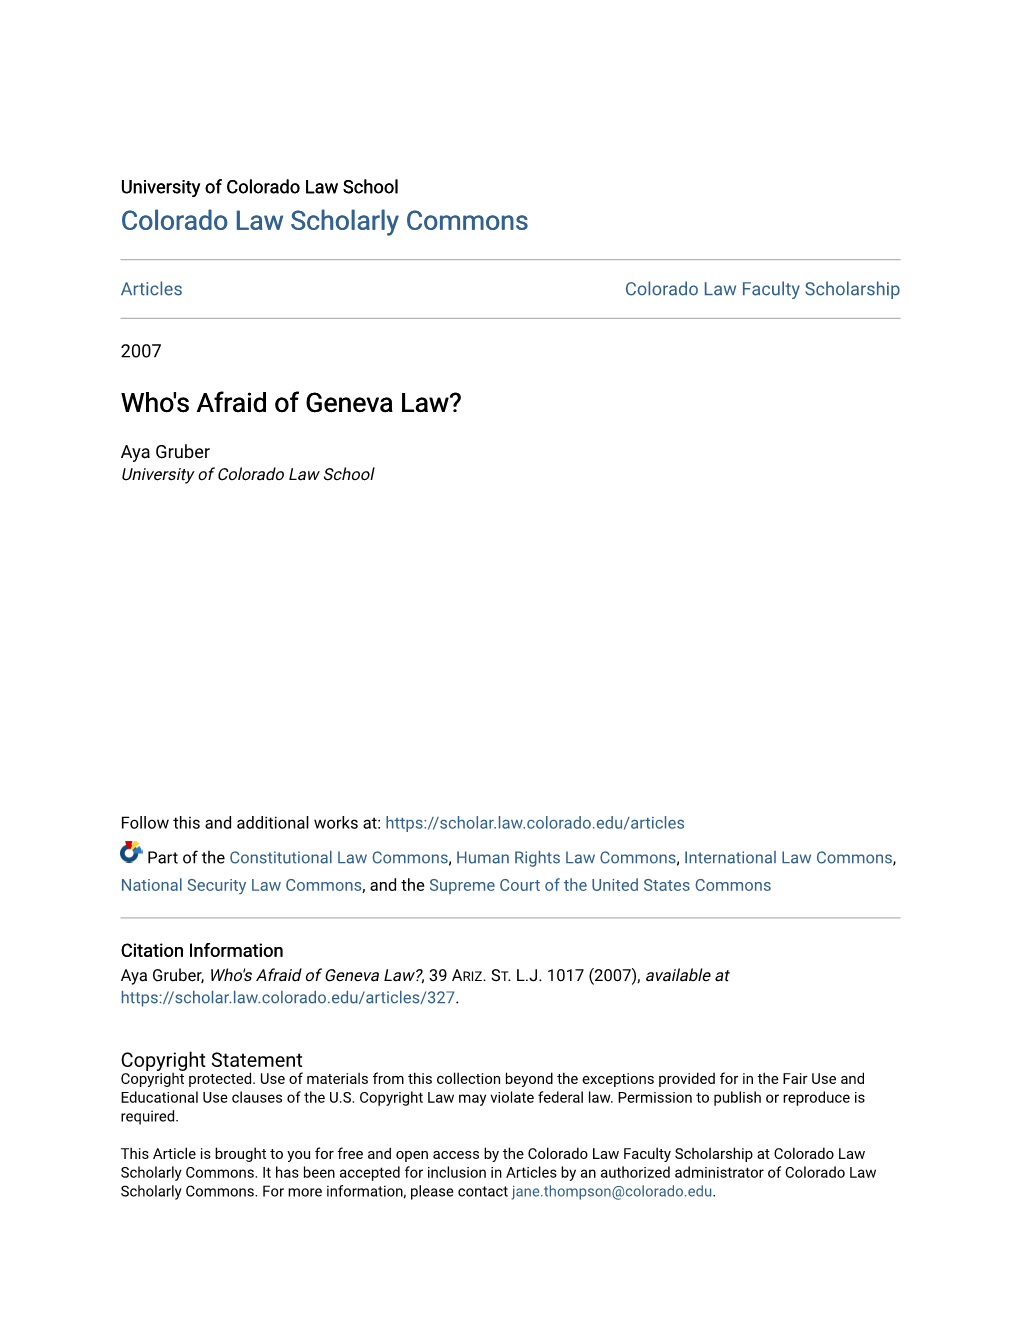 Who's Afraid of Geneva Law?